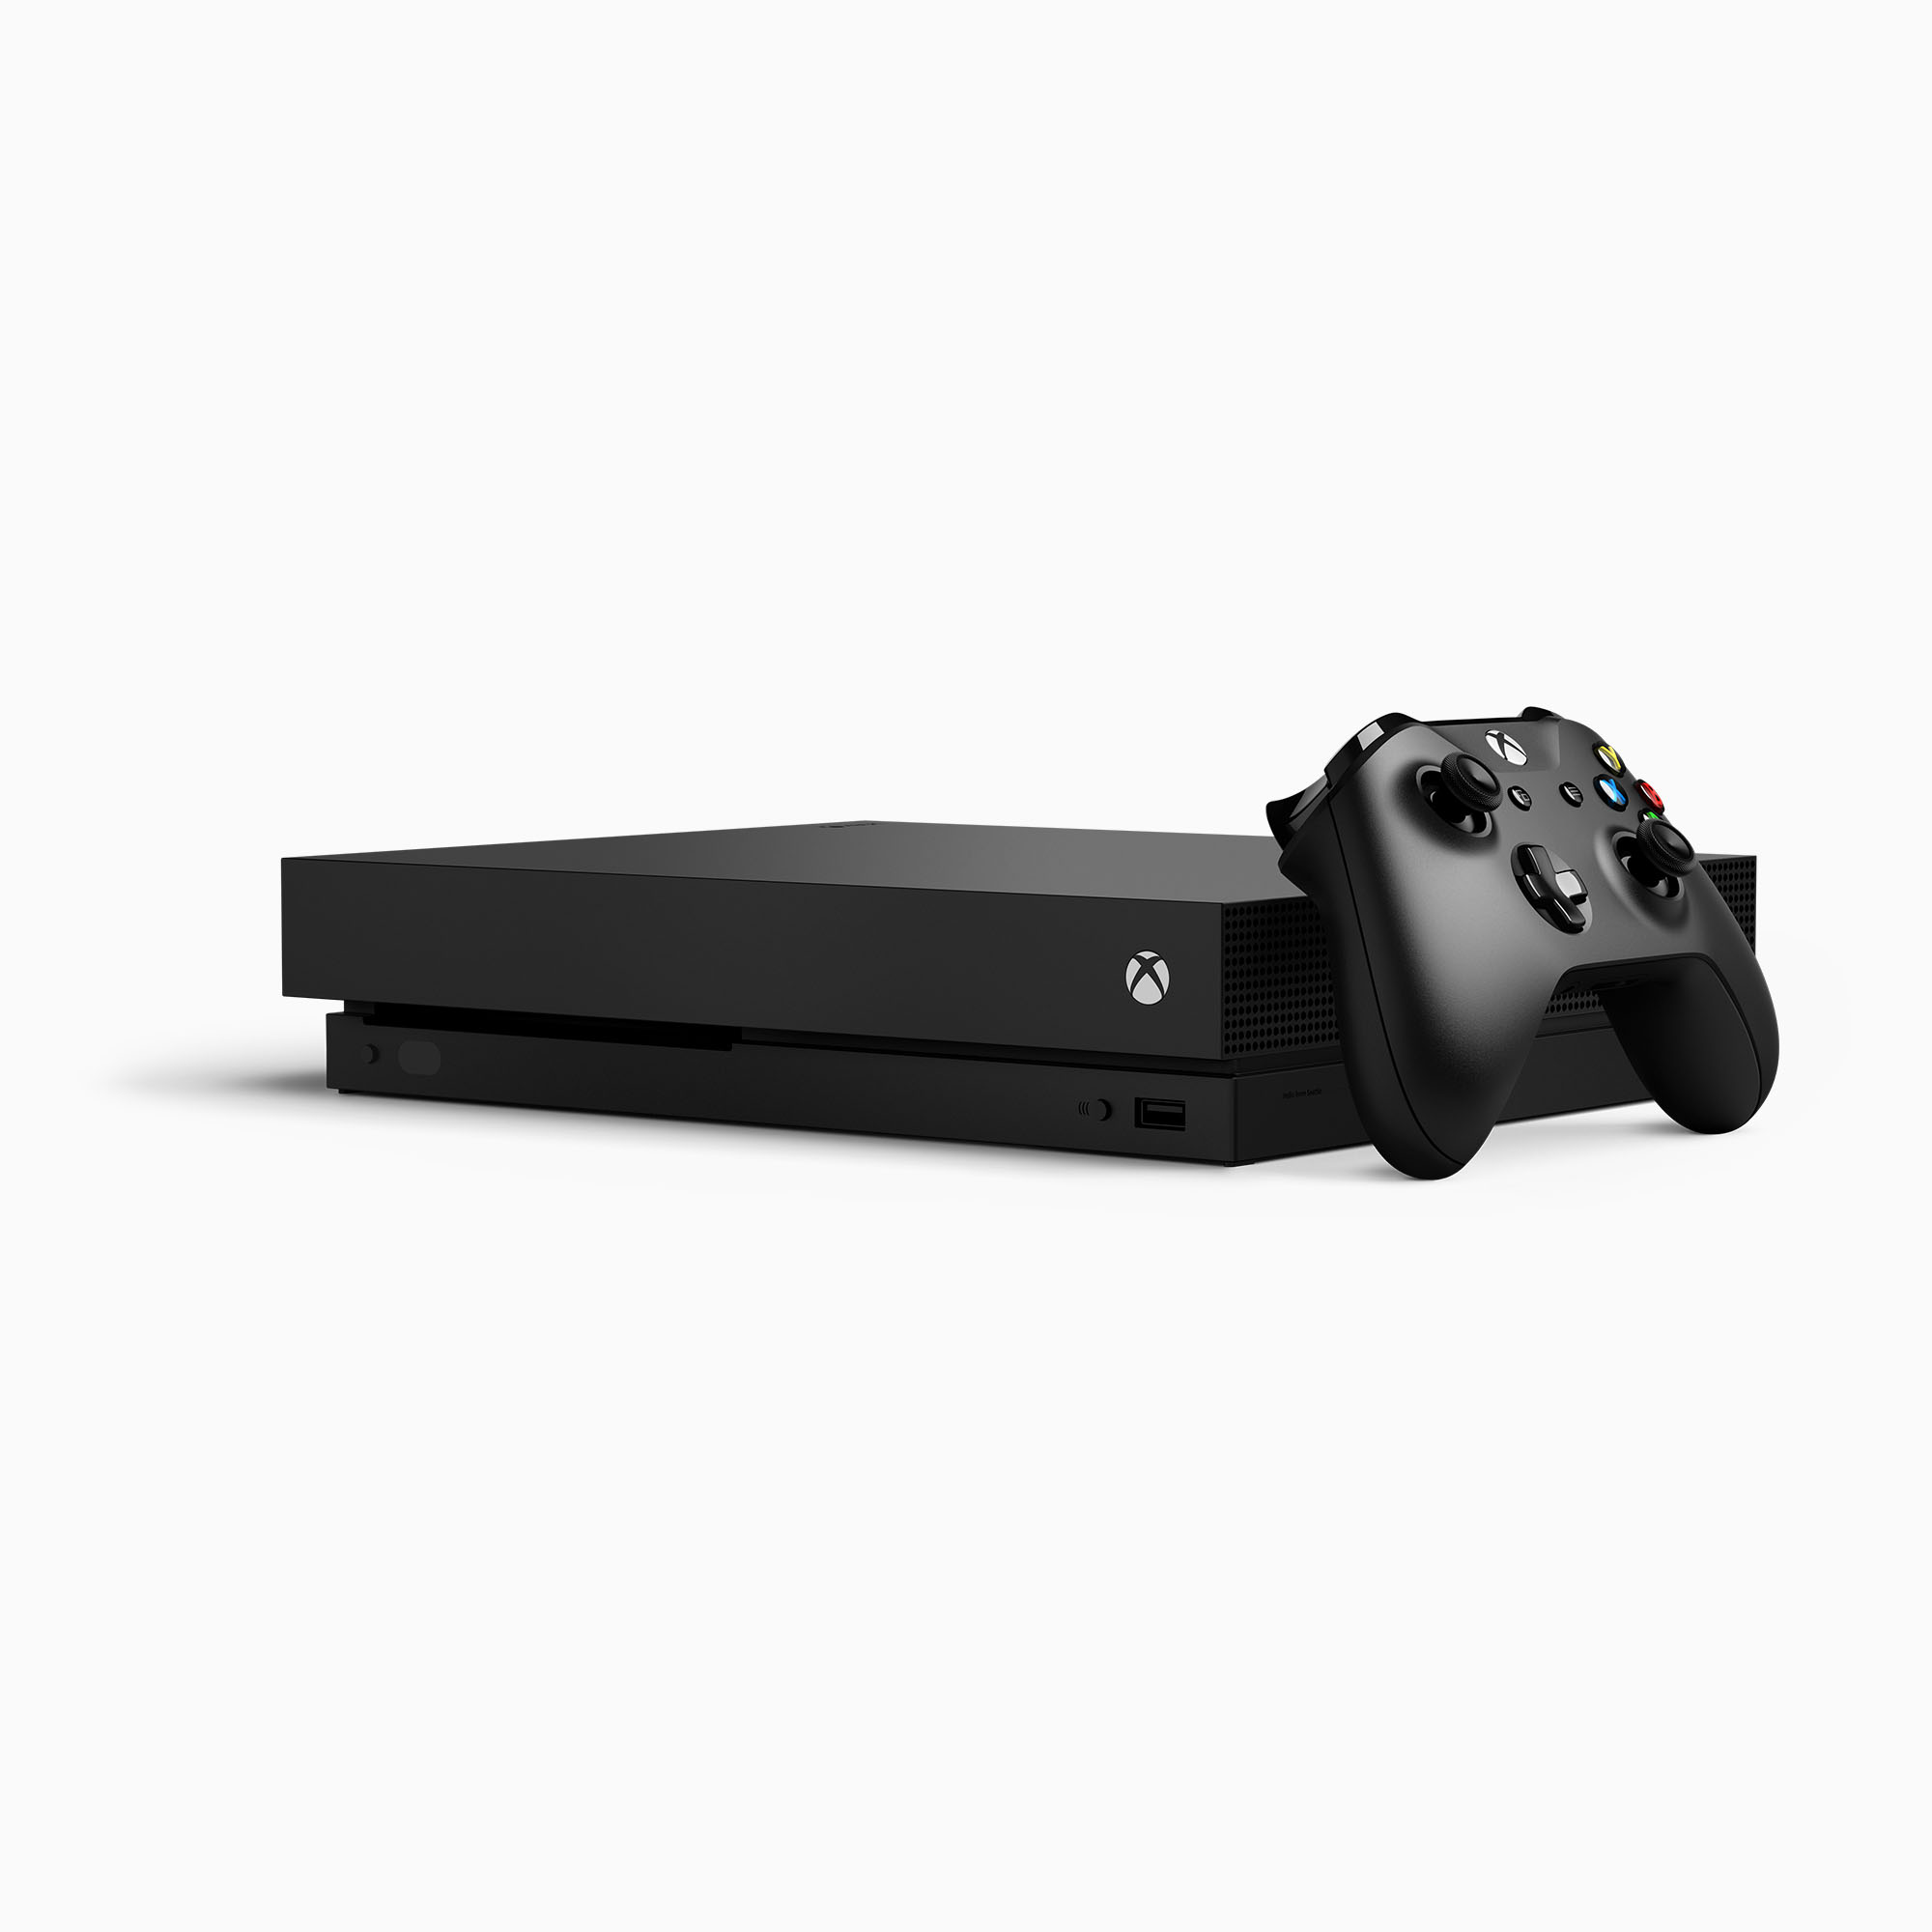 Microsoft Xbox One X 1TB Console, Black, CYV-00001 - Walmart.com